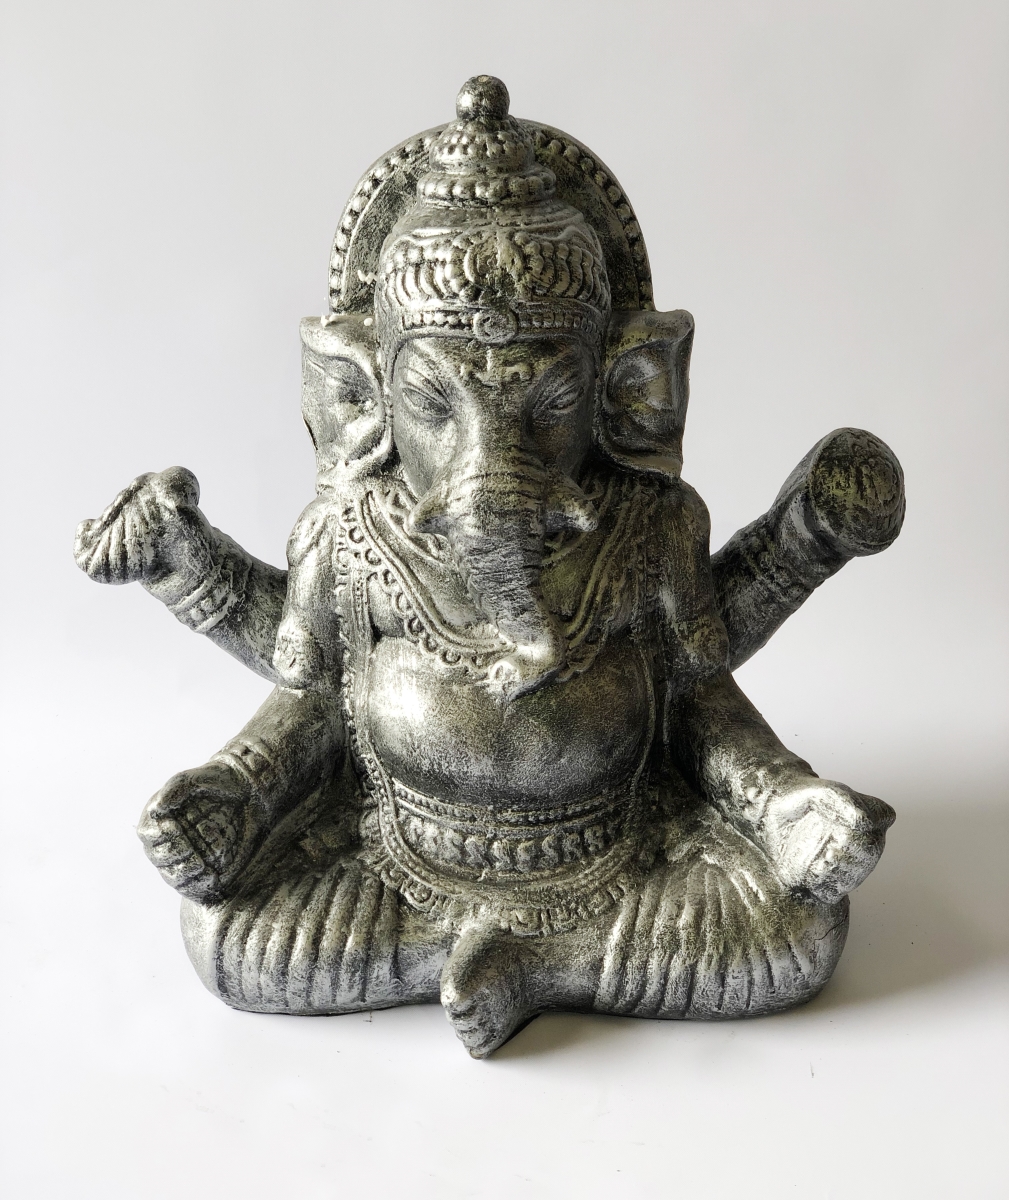 12015825 Fiberglass Reinforced Cast Stone Small Ganesh Sculpture, Silver Wash